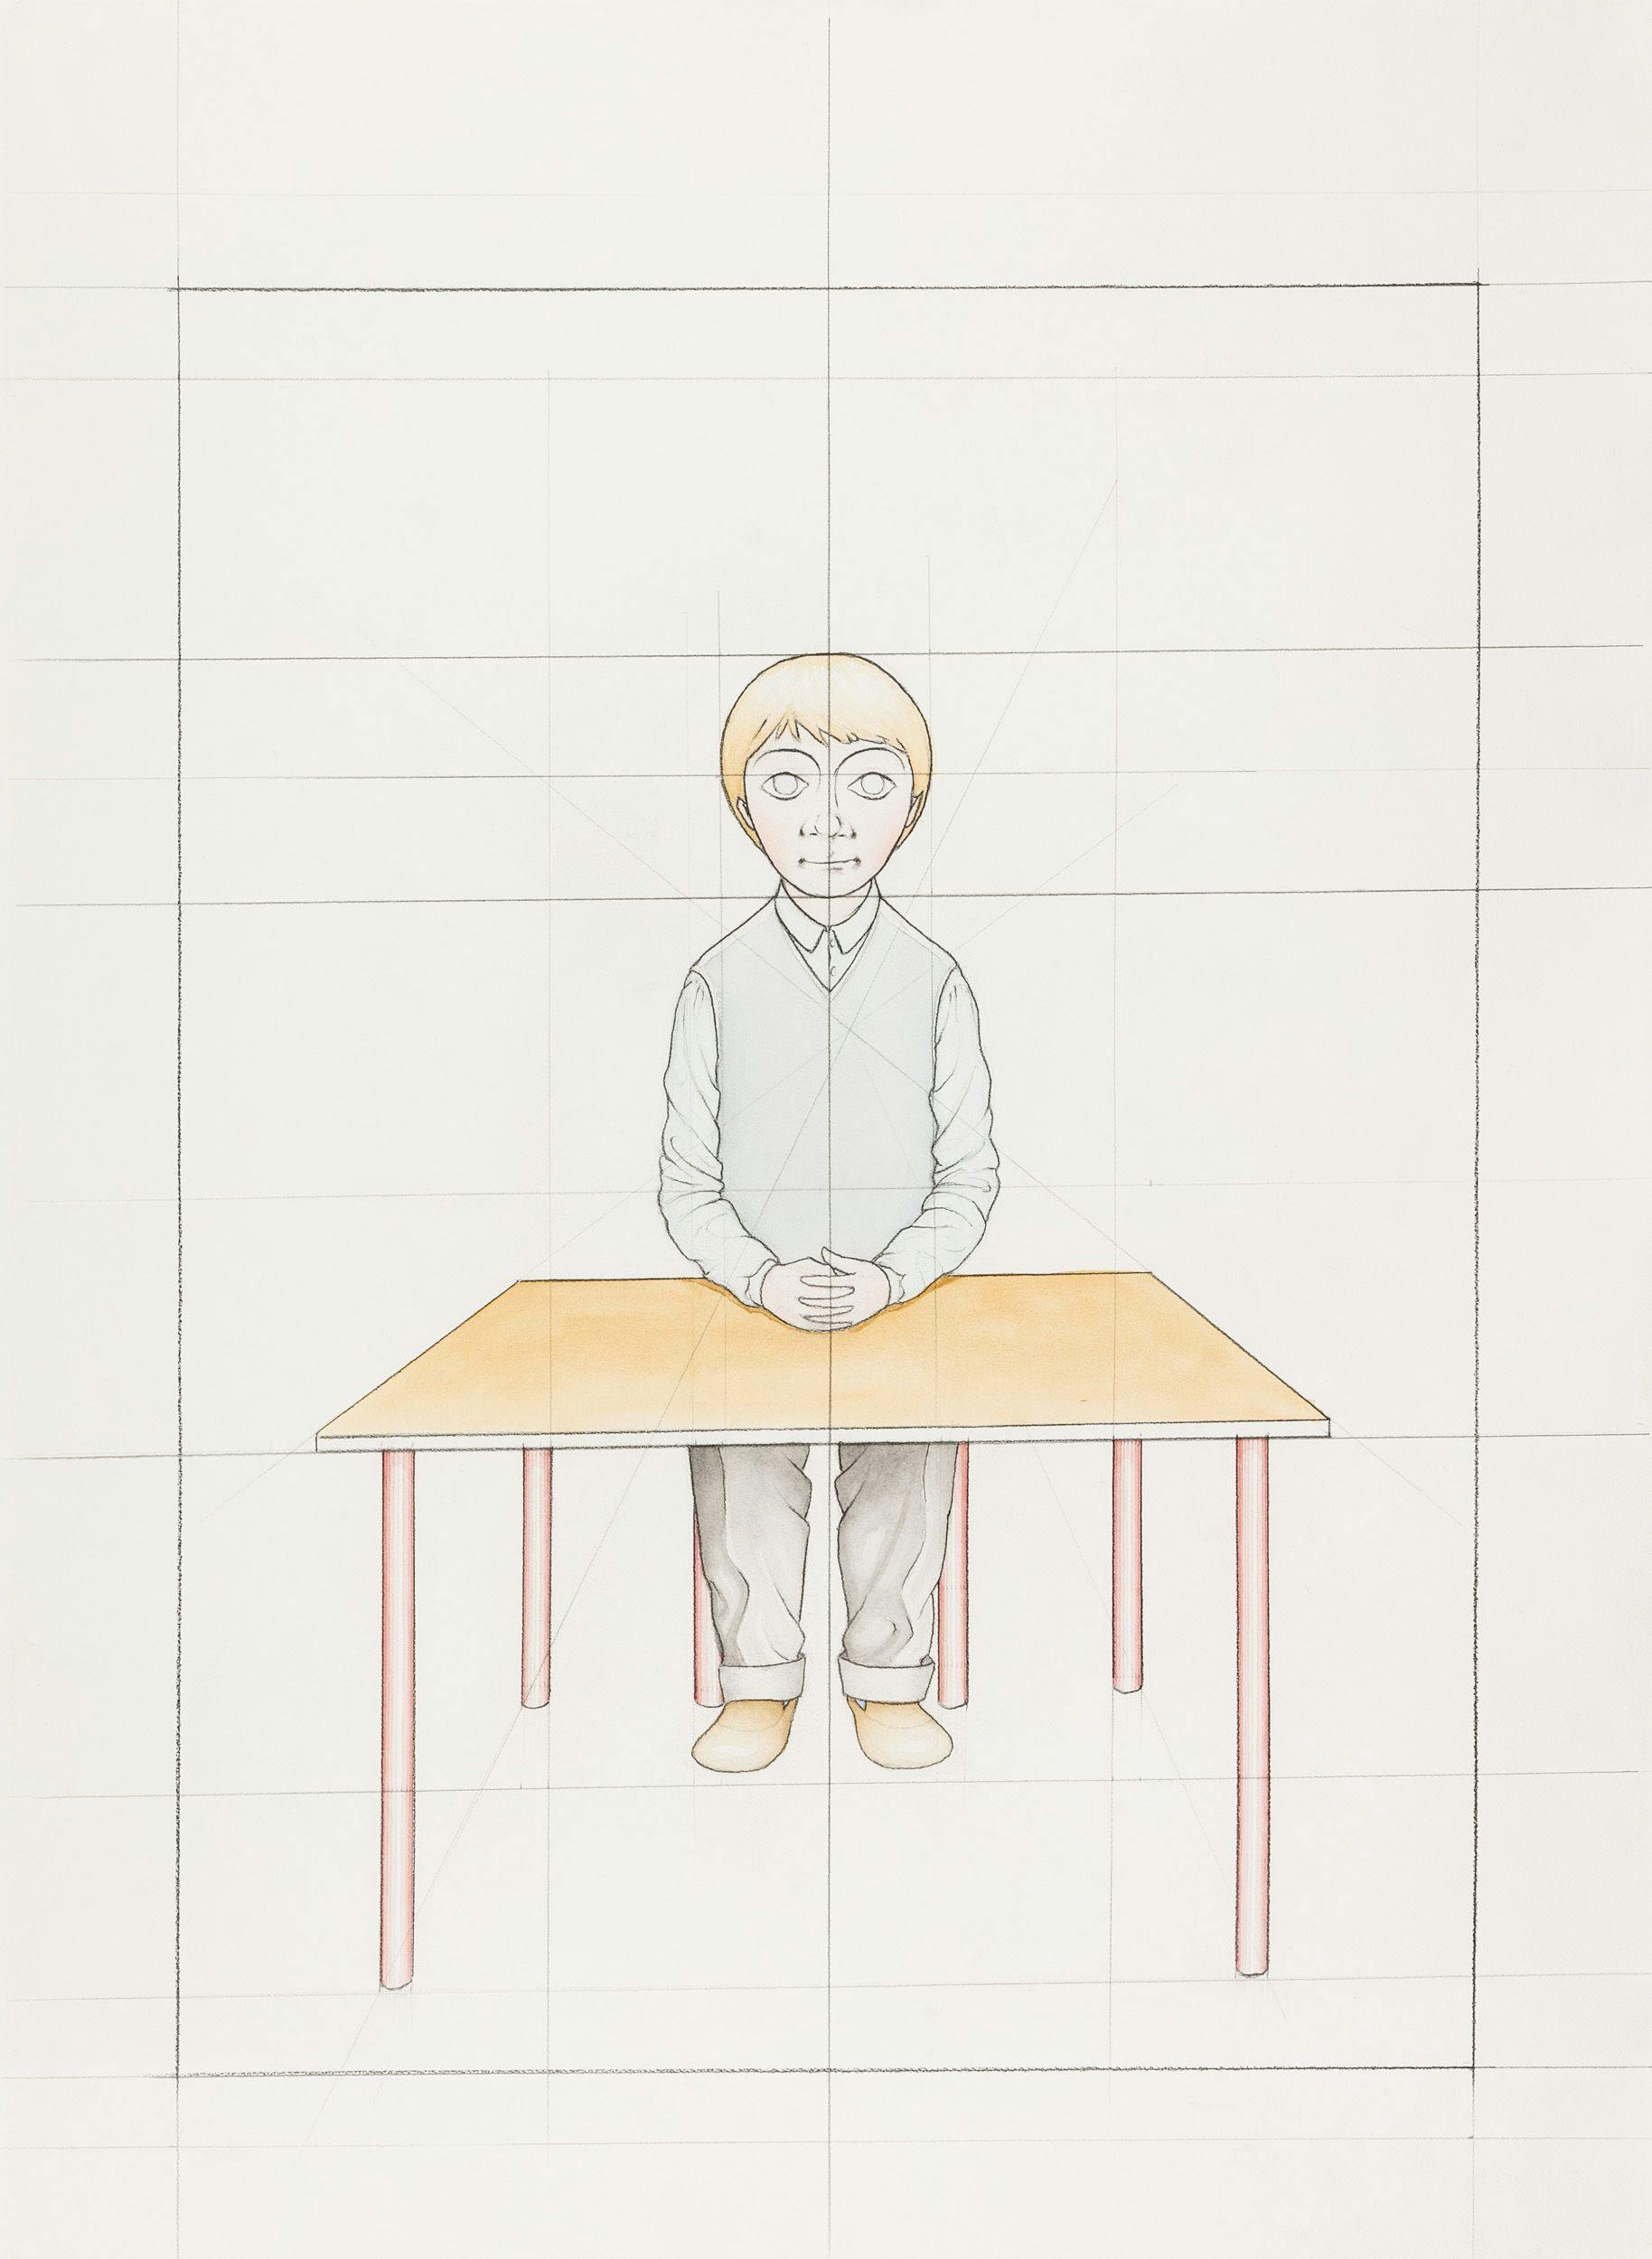 Konstverk: Peter Land, An Attempt to Reconstruct my Primary School Class from Memory (16) work in progress, 2012